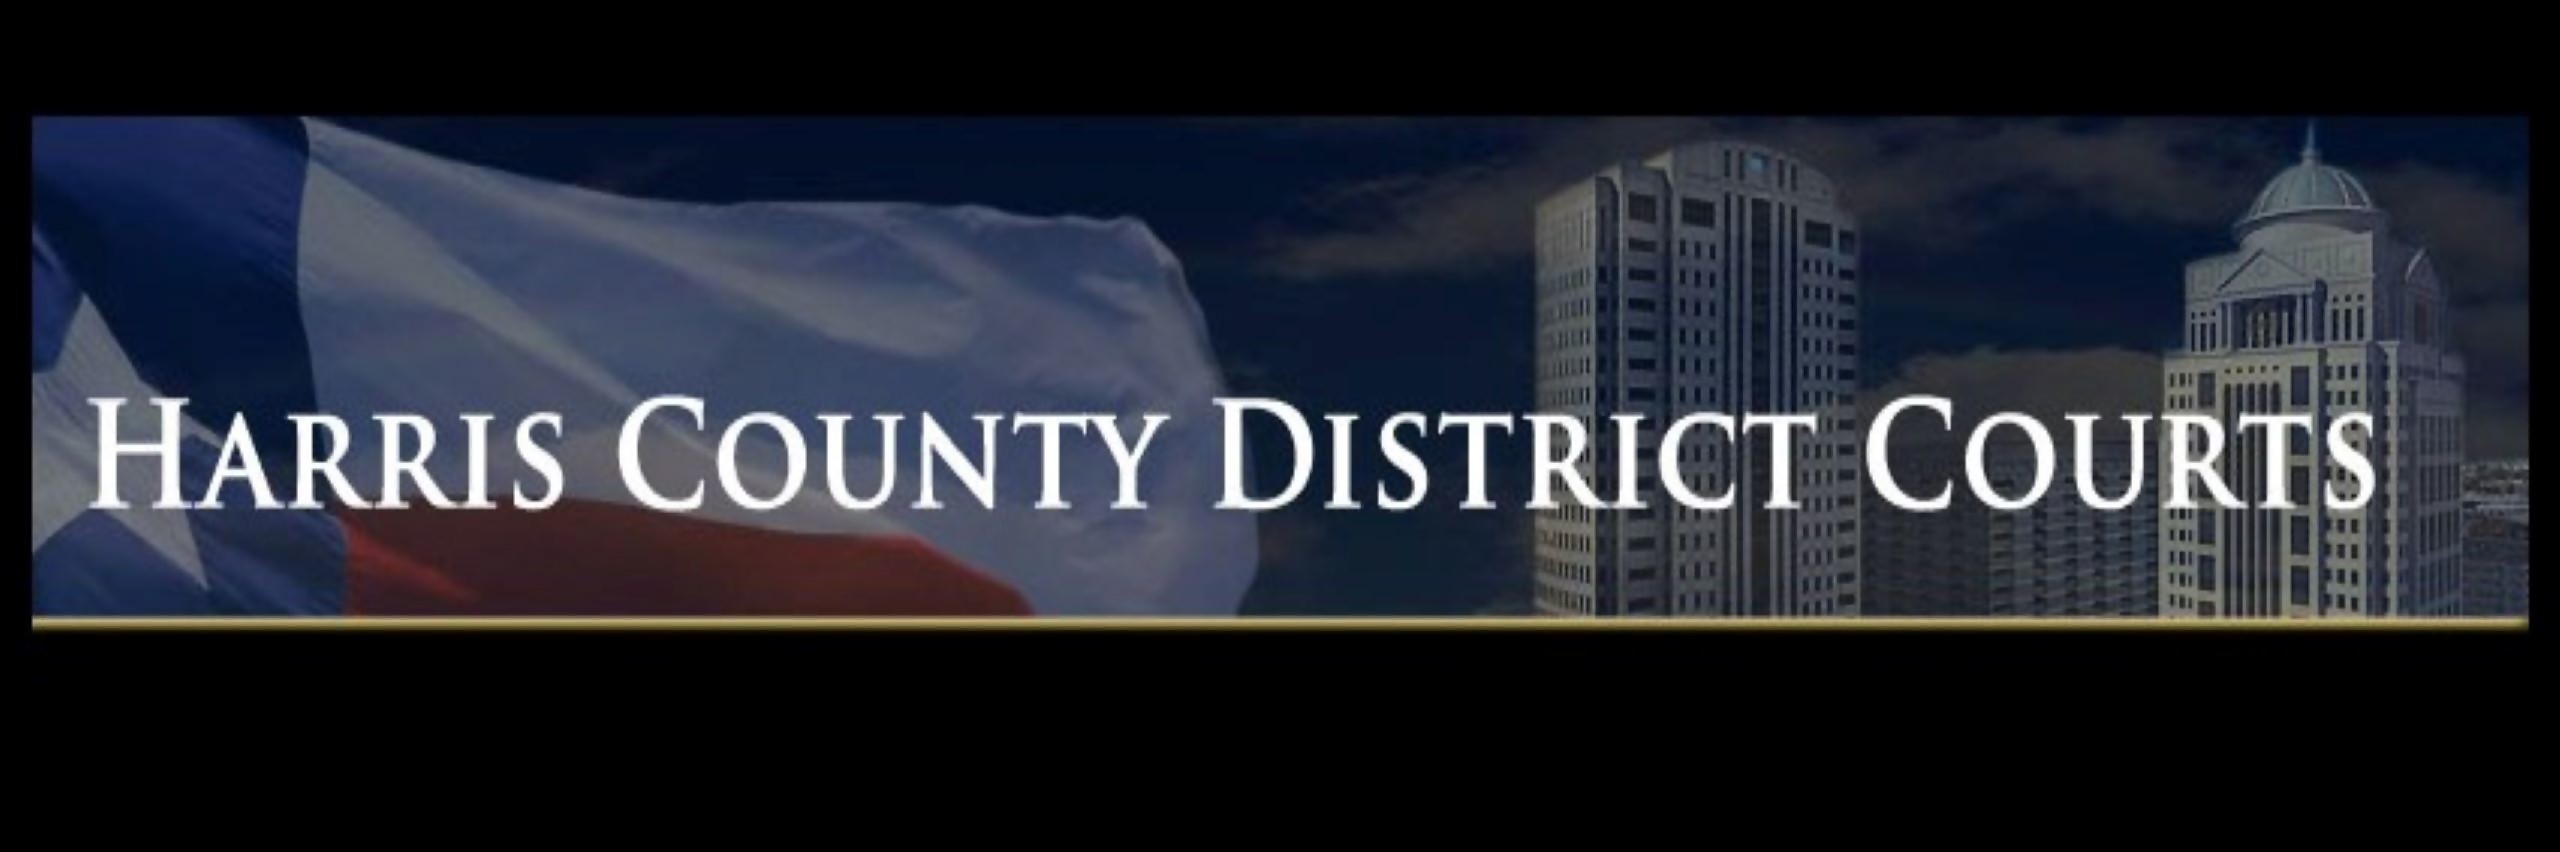 183th District Court - Live Stream